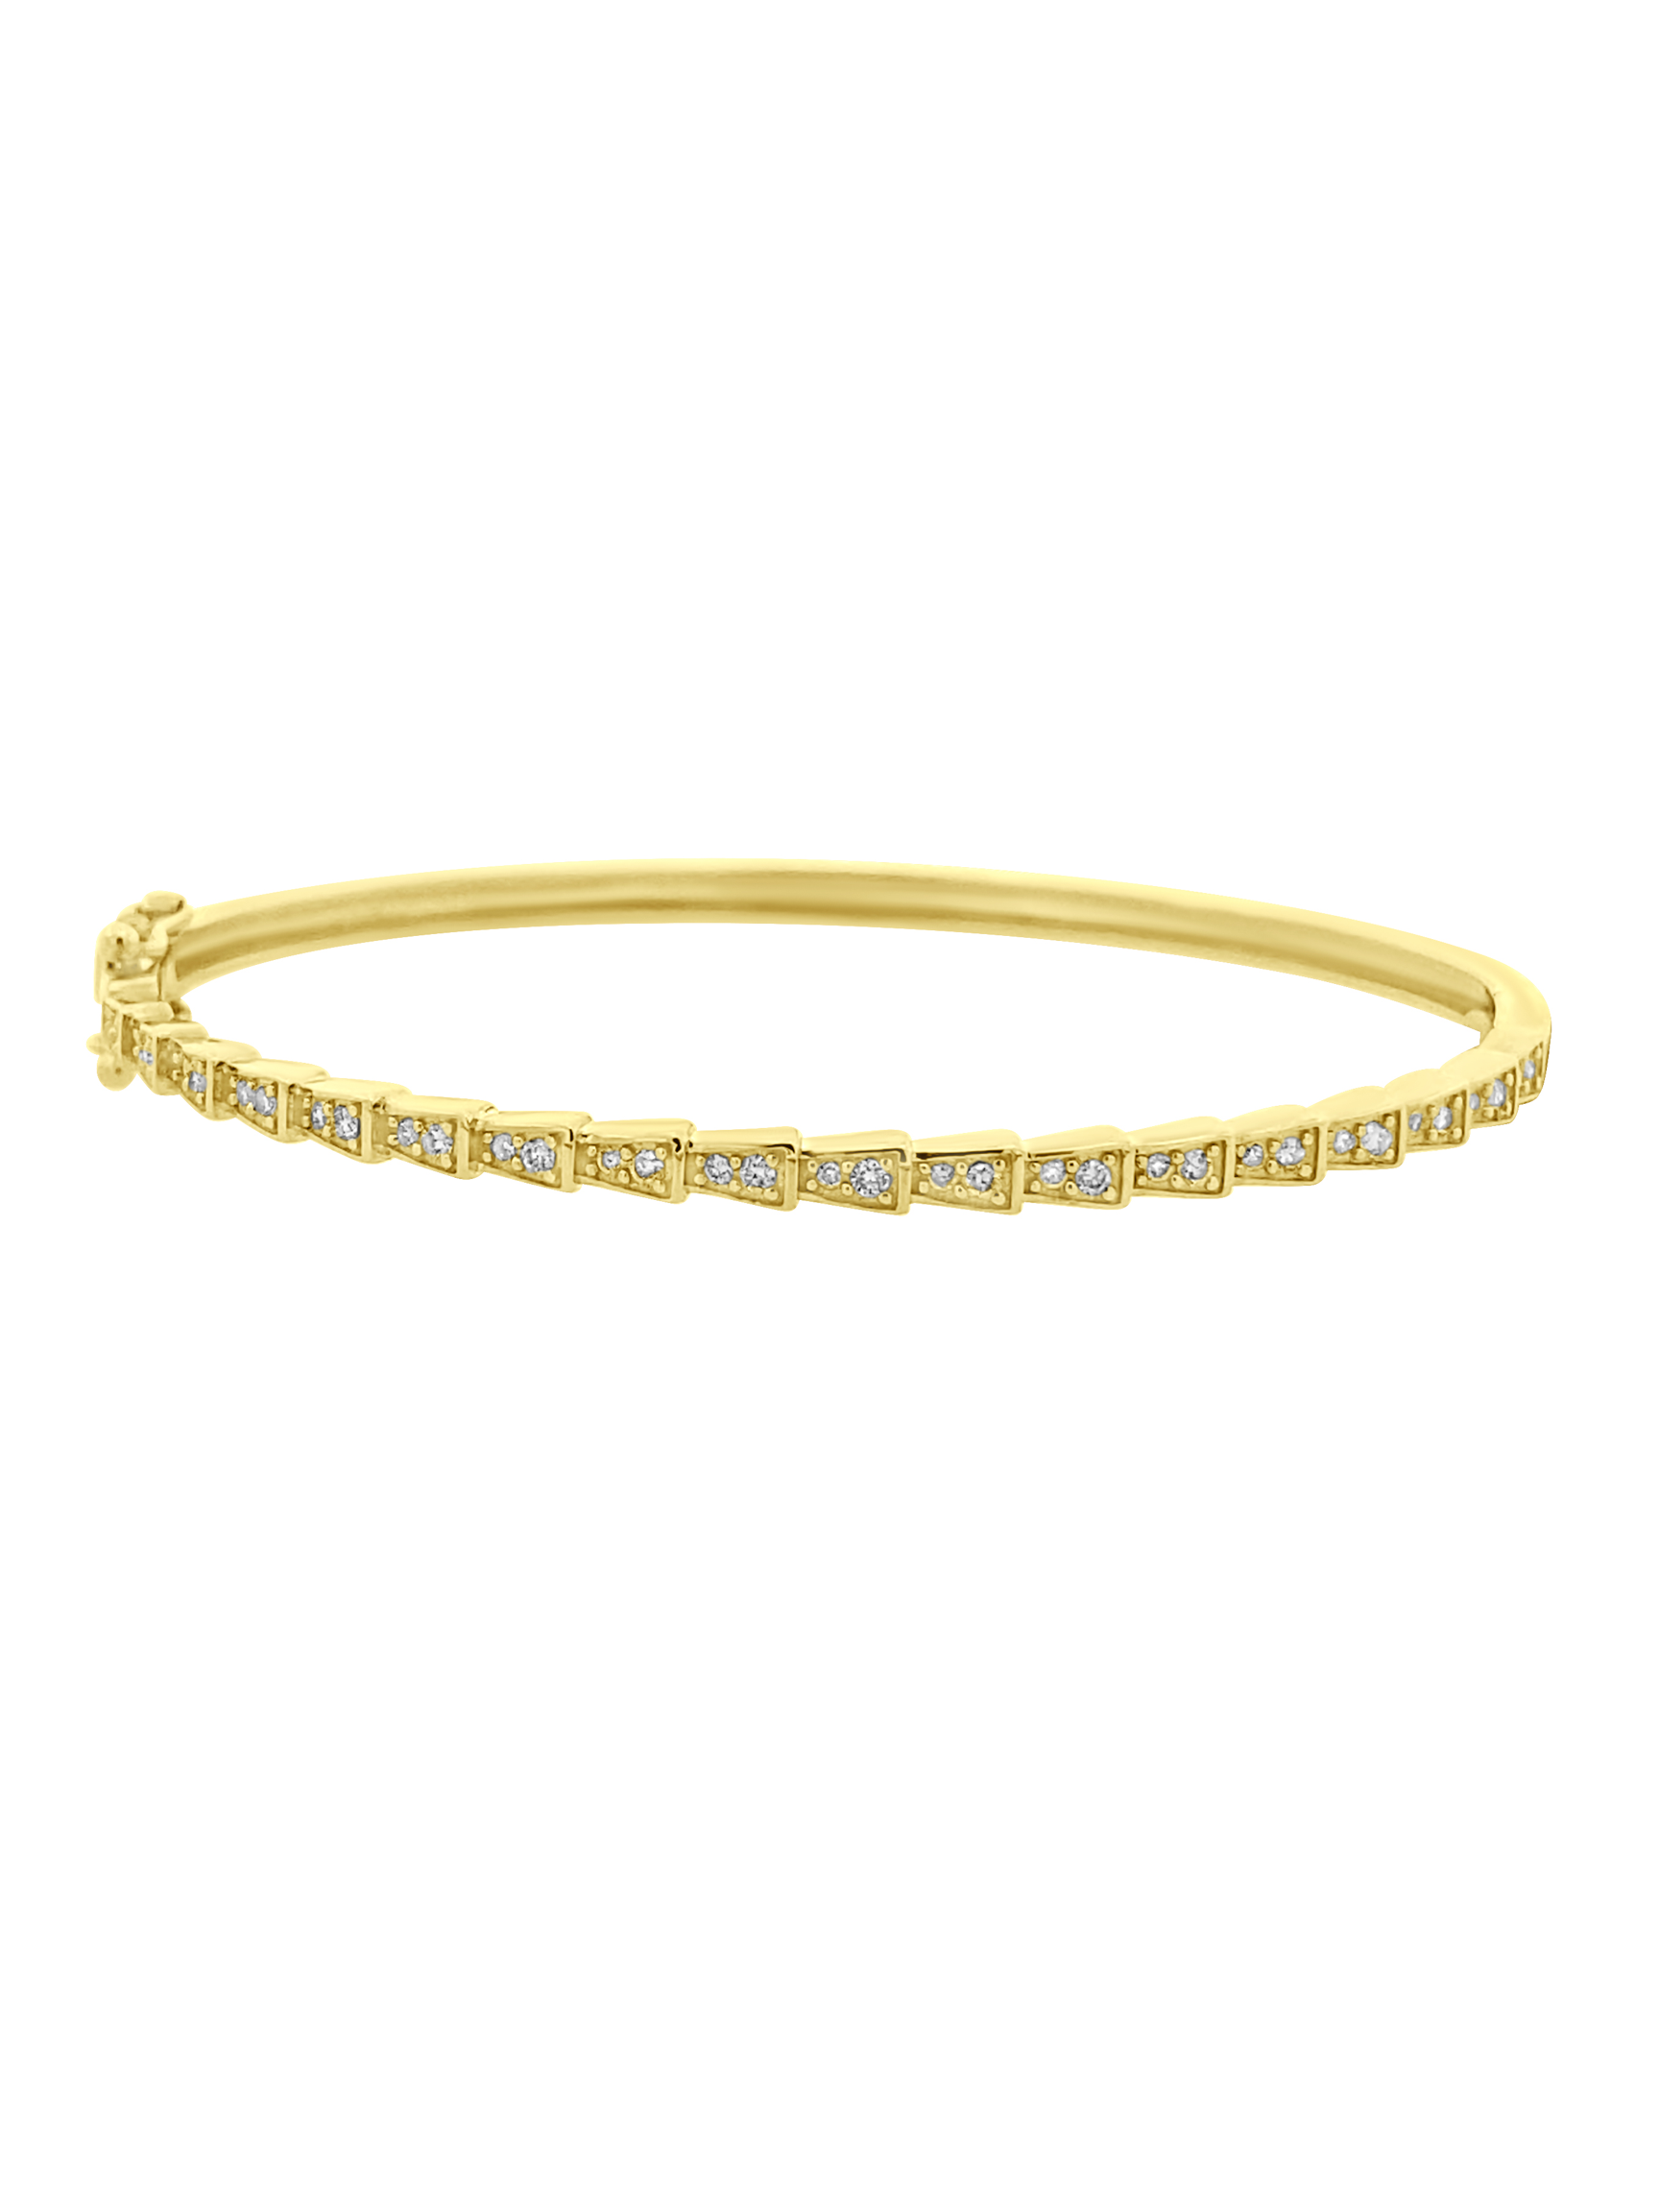 Diamond Serpenti Style Bracelet